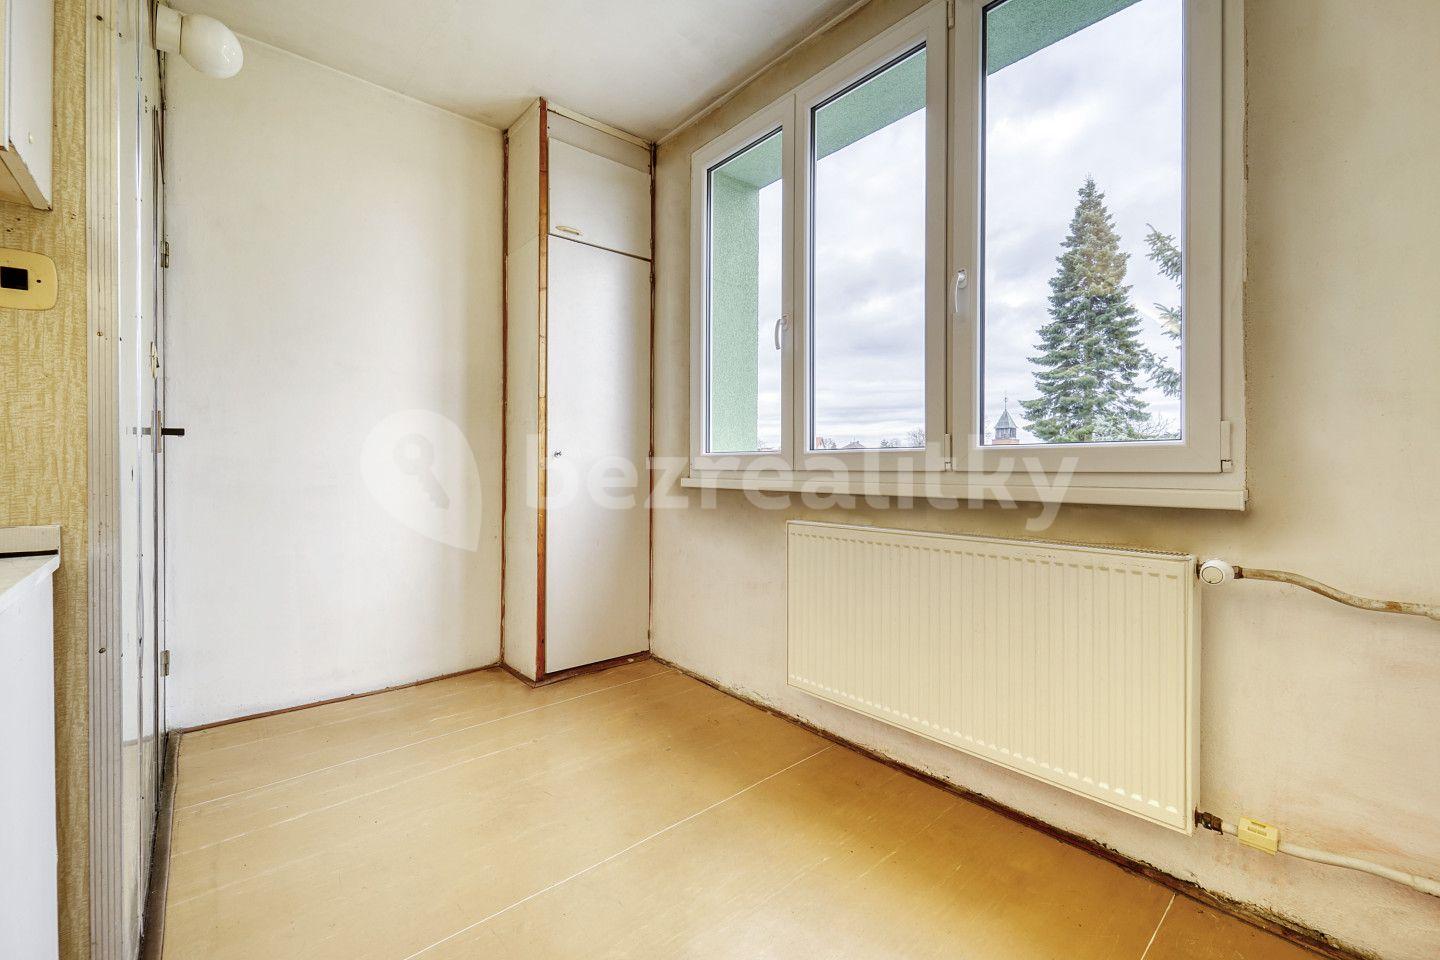 3 bedroom flat for sale, 76 m², Liliová, Kralovice, Plzeňský Region